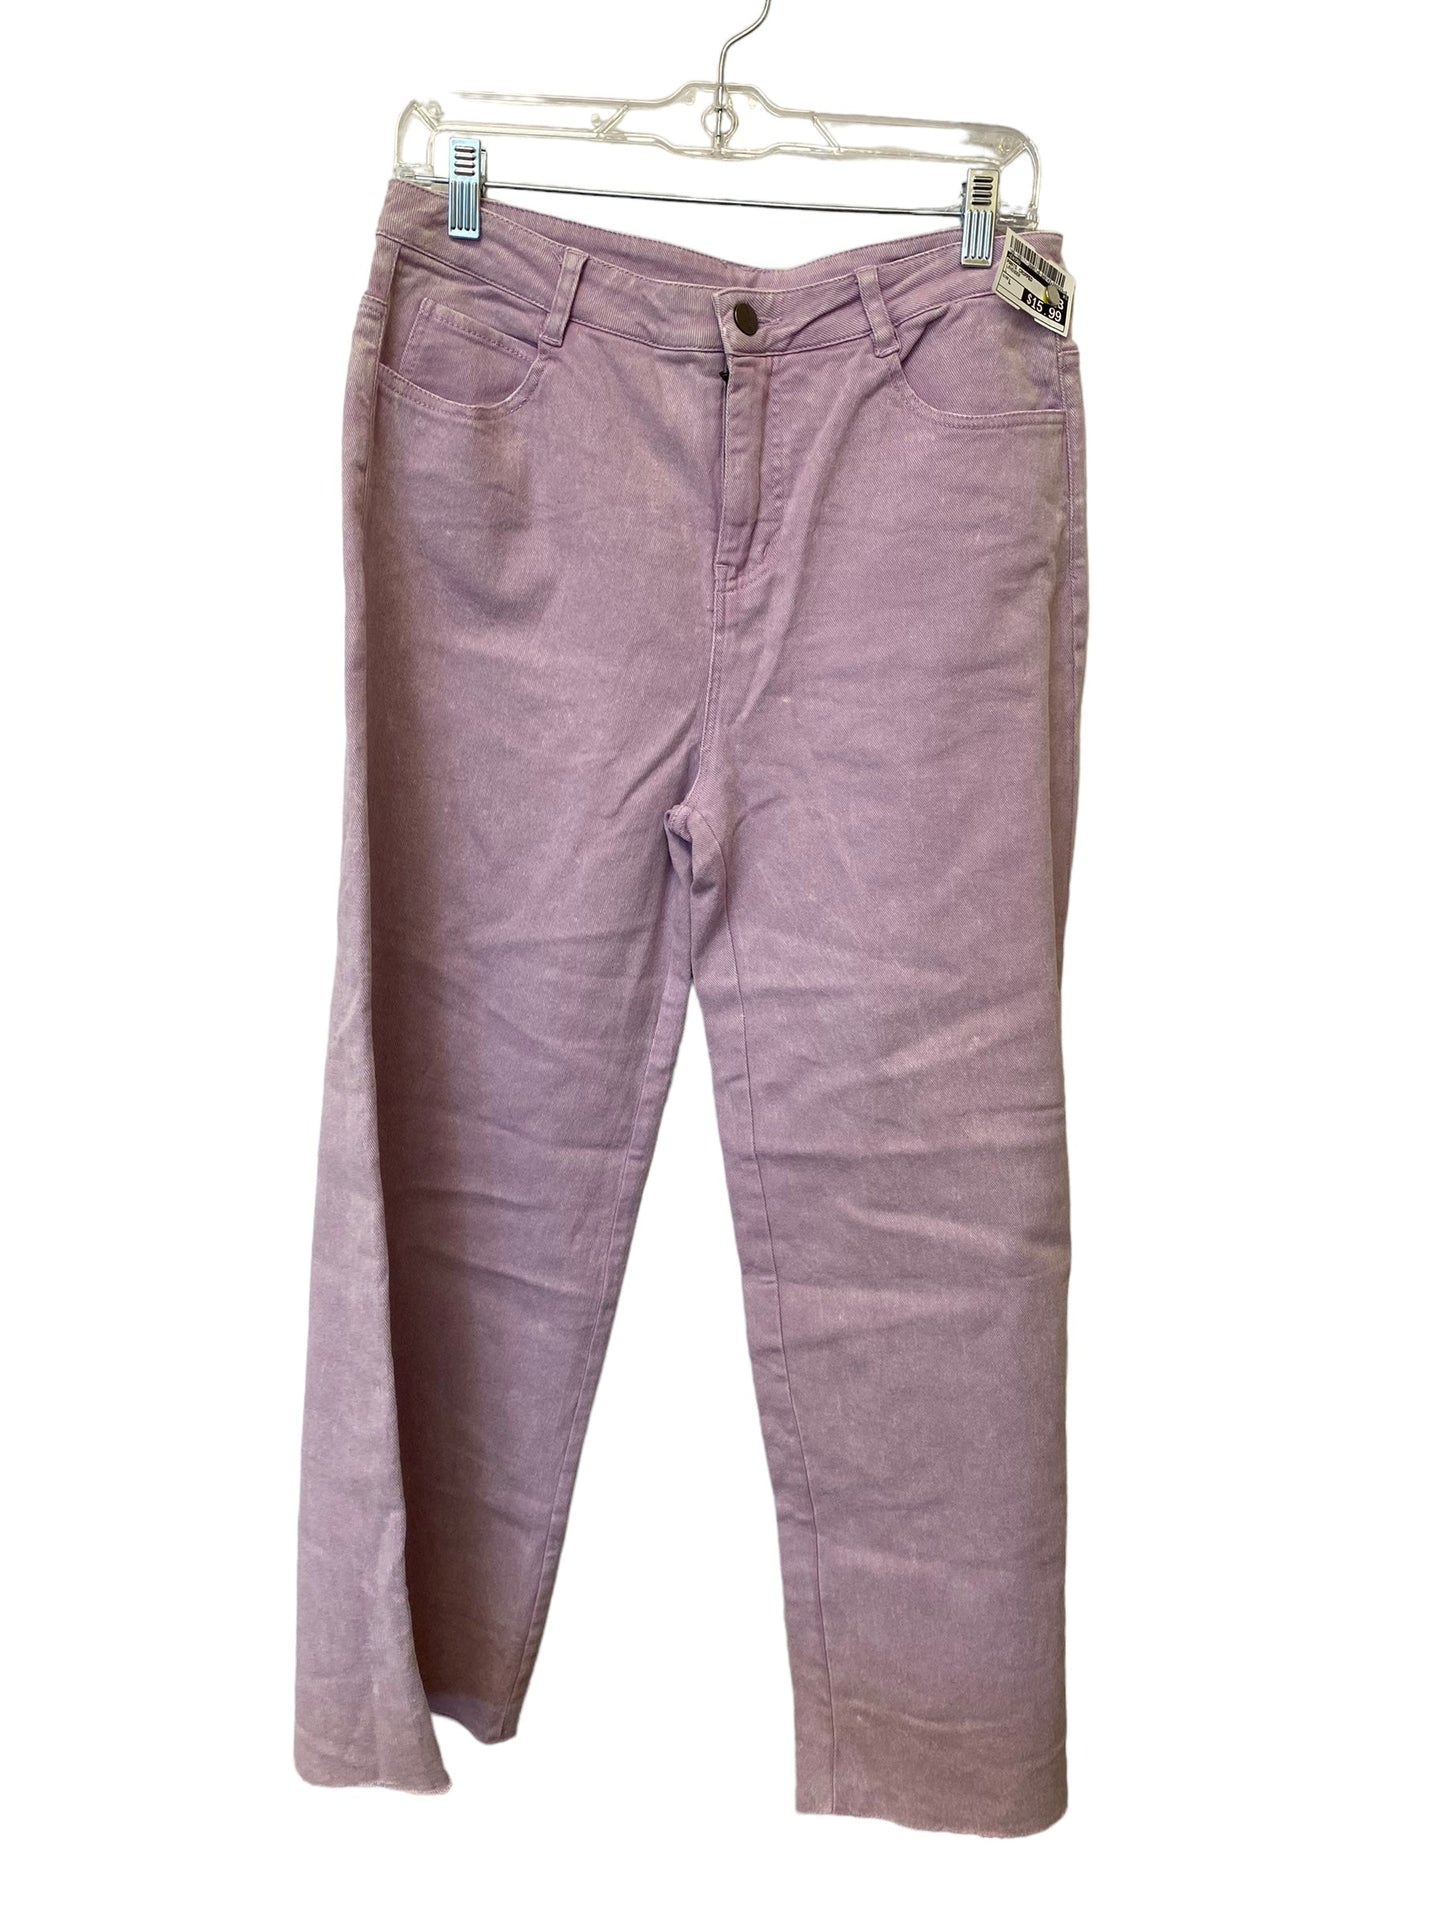 Pants Cropped By Entro  Size: L